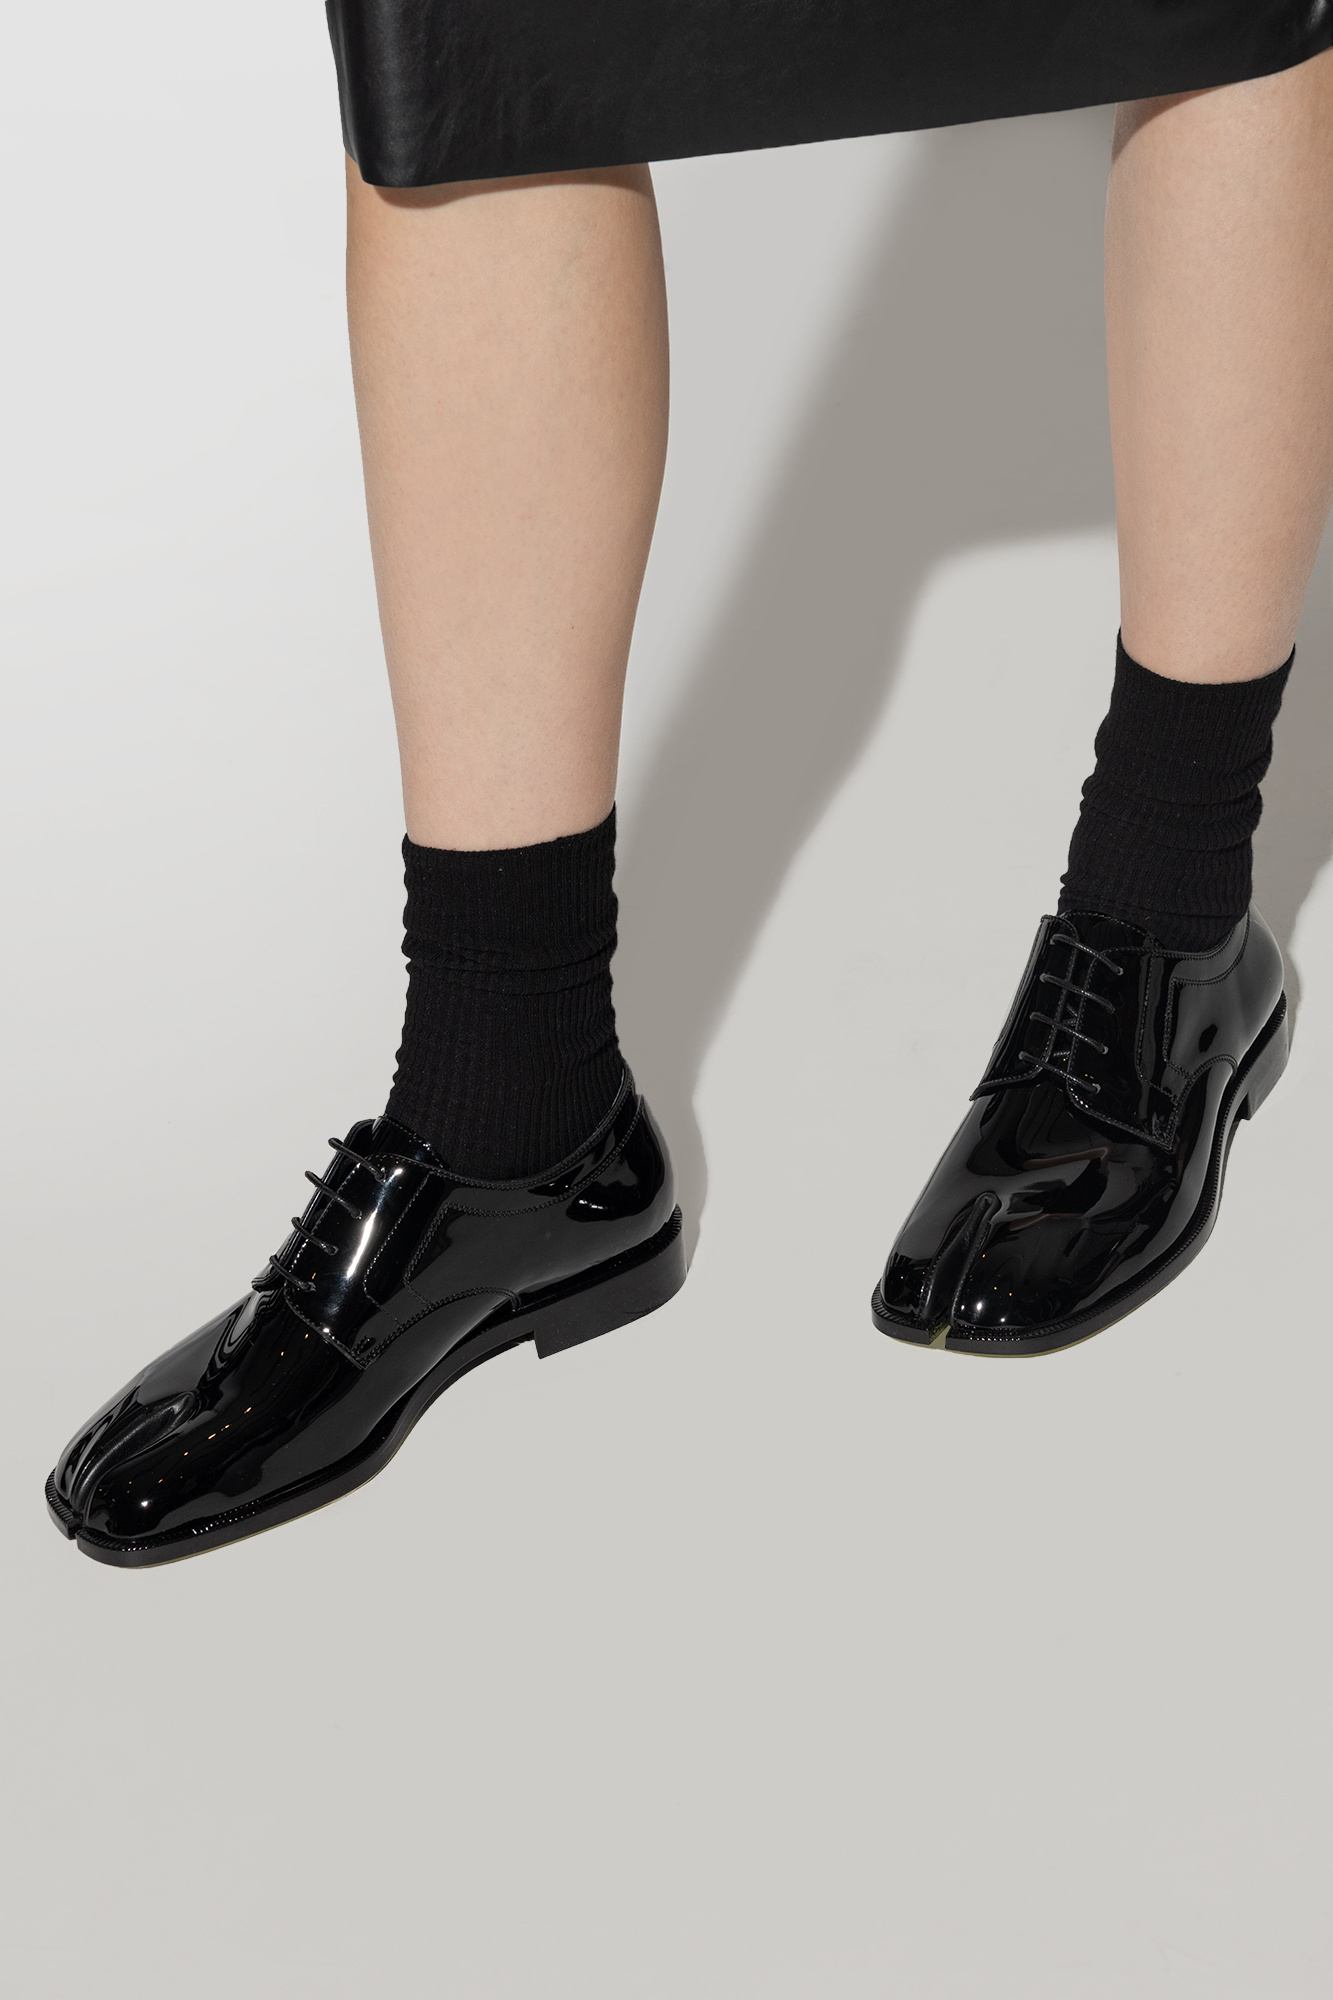 Maison Margiela zapatillas de running Salomon minimalistas talla 31 baratas menos de 60